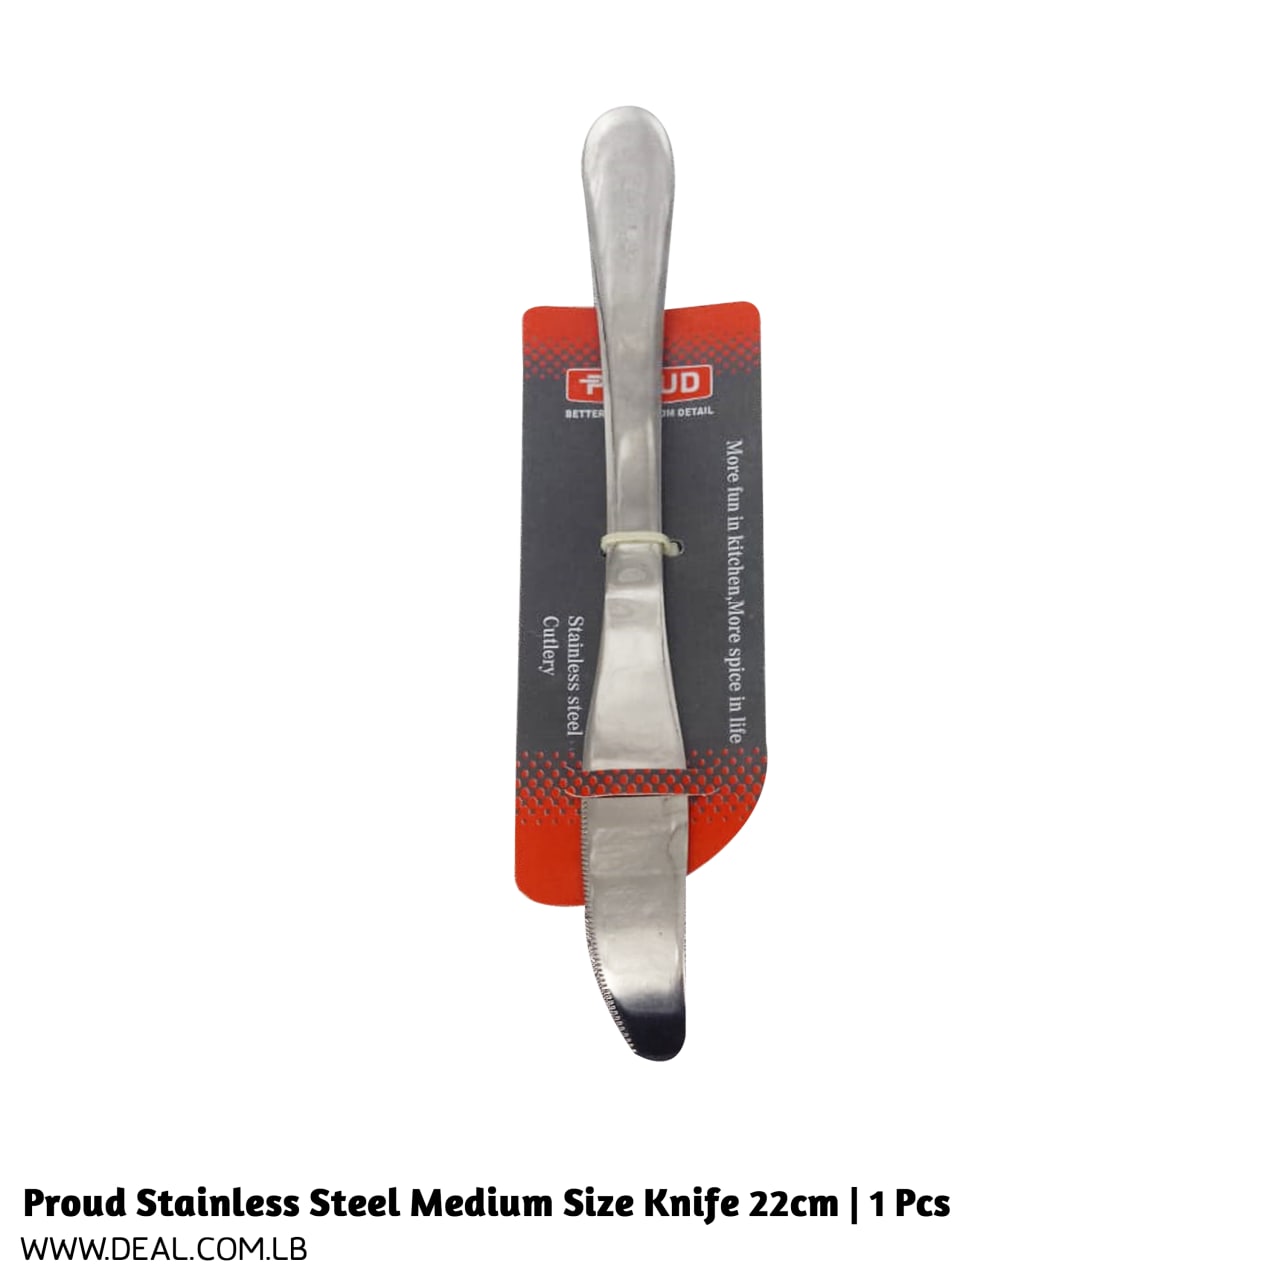 Proud+Stainless+Steel+Medium+Size+Knife+22cm+%7C+1+Pcs